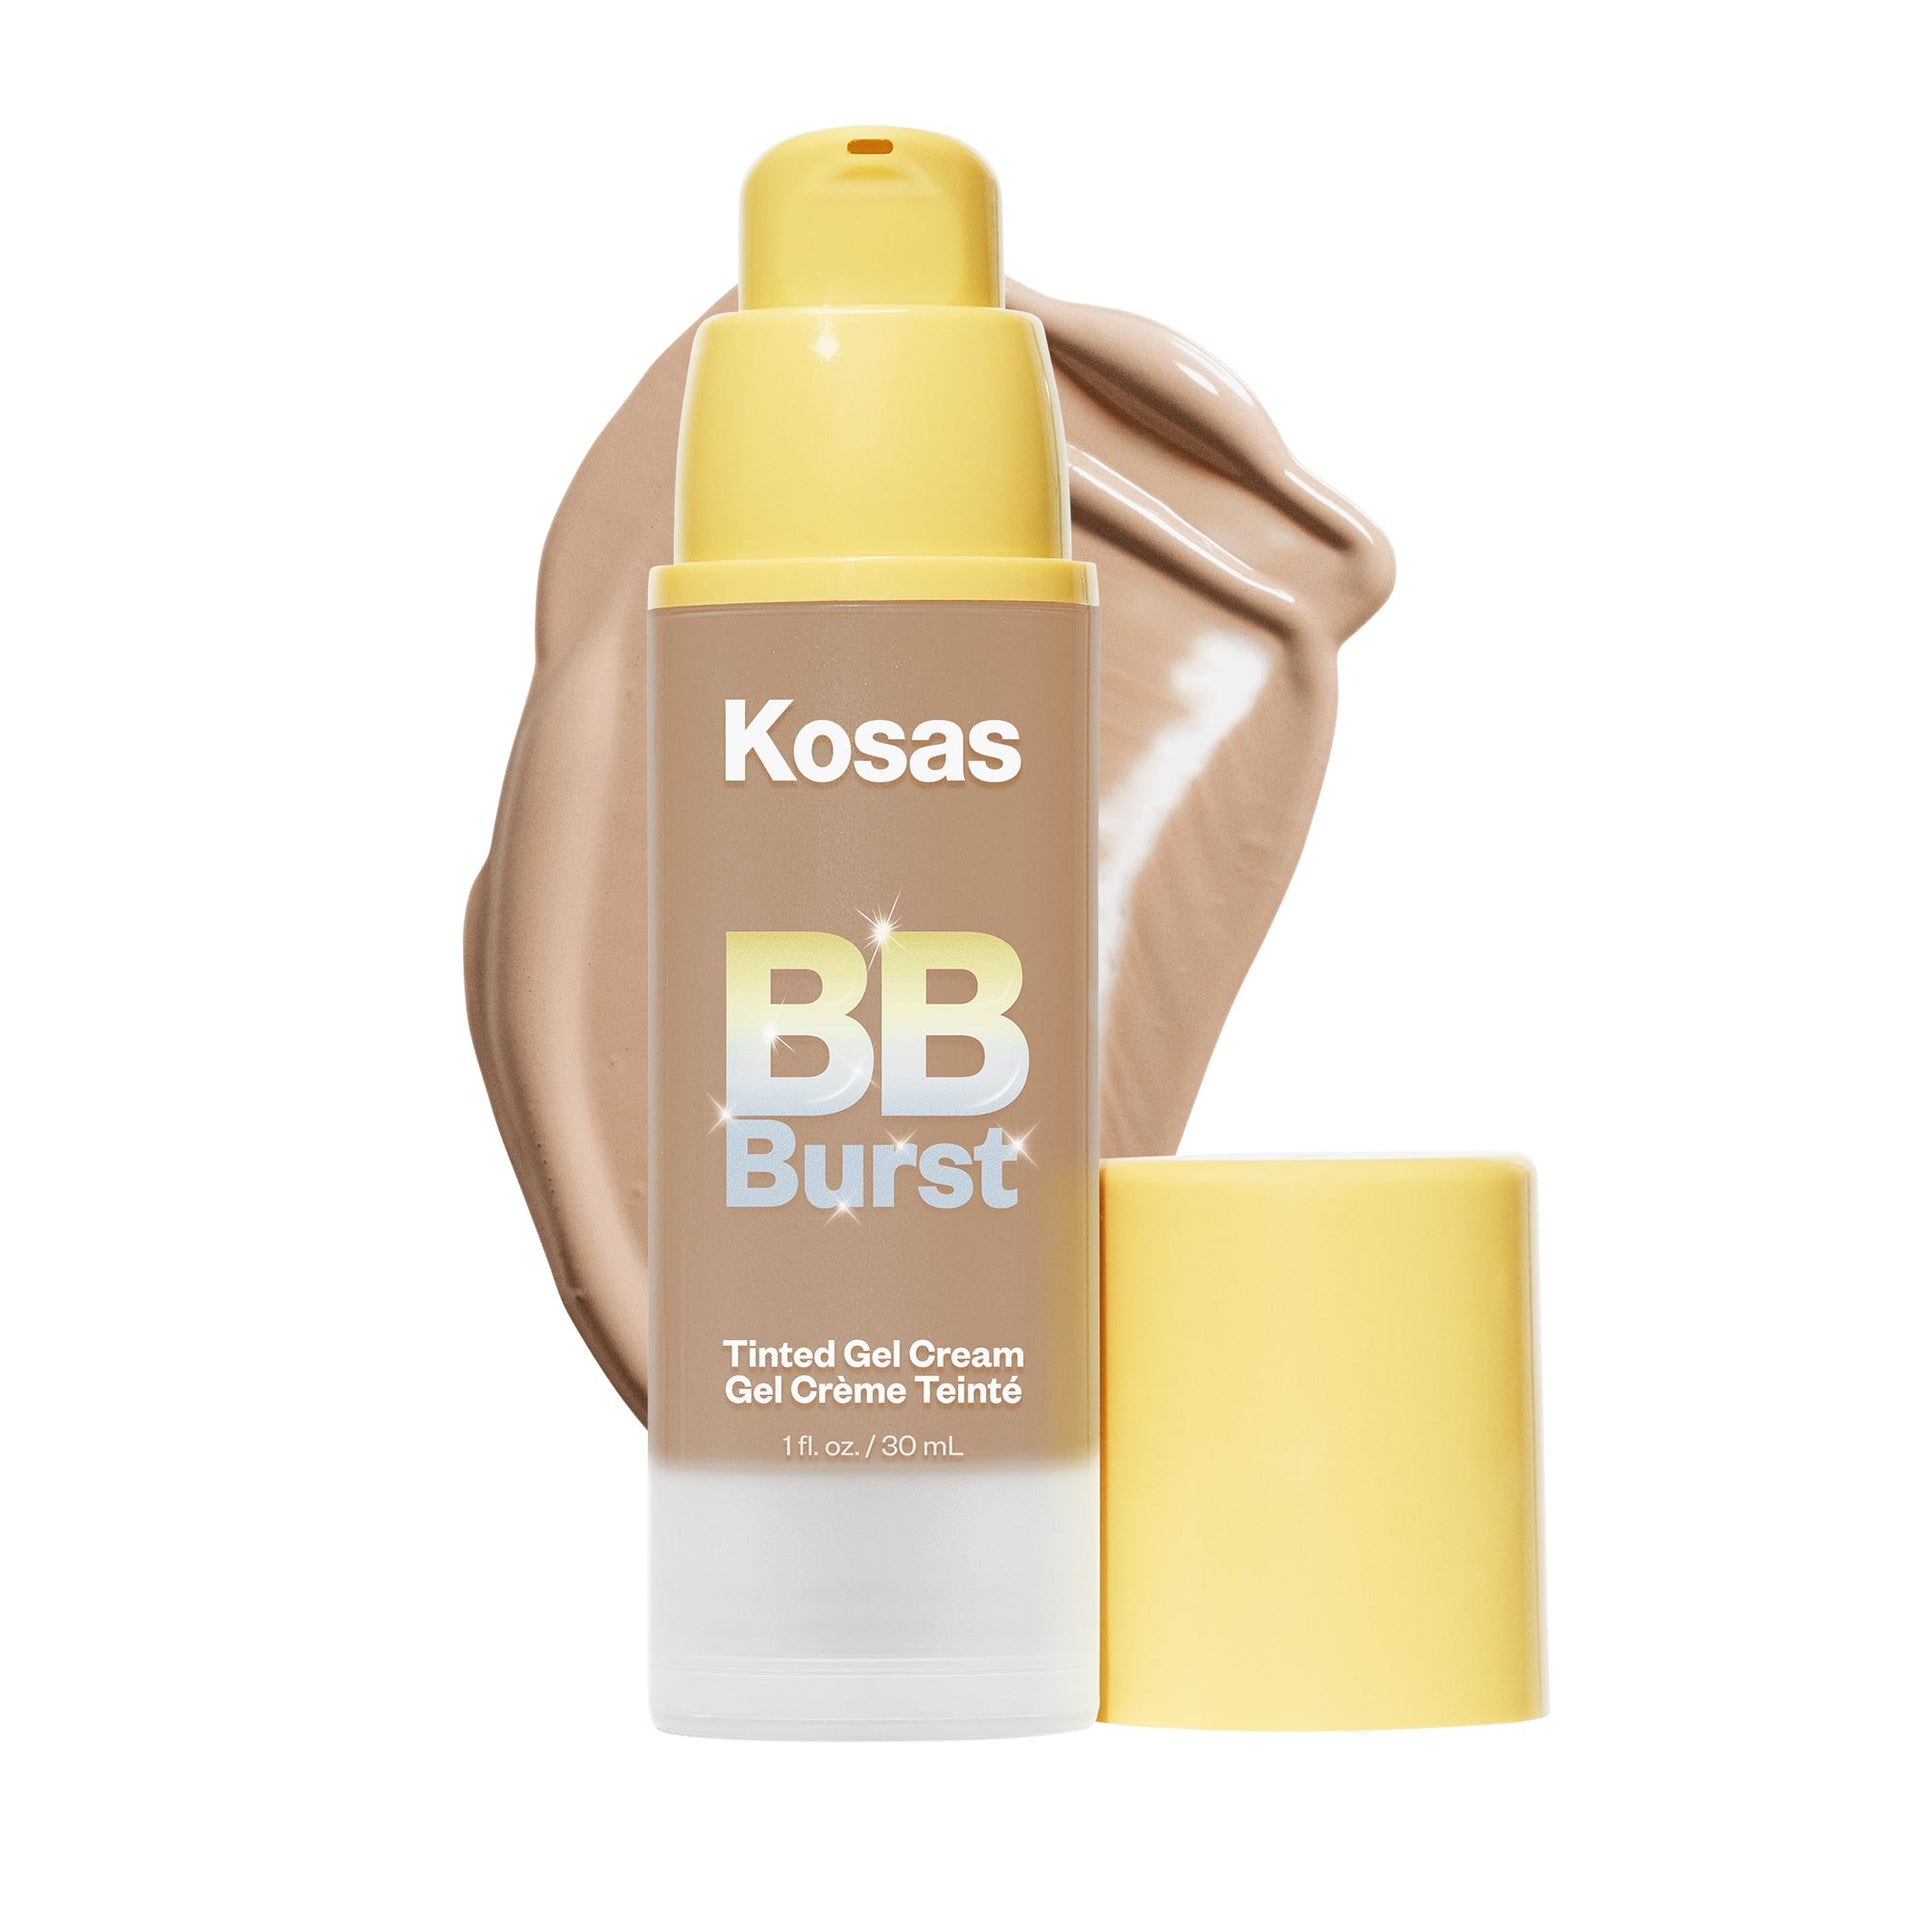 Kosas BB Burst in the shade Medium Tan Neutral Cool 30